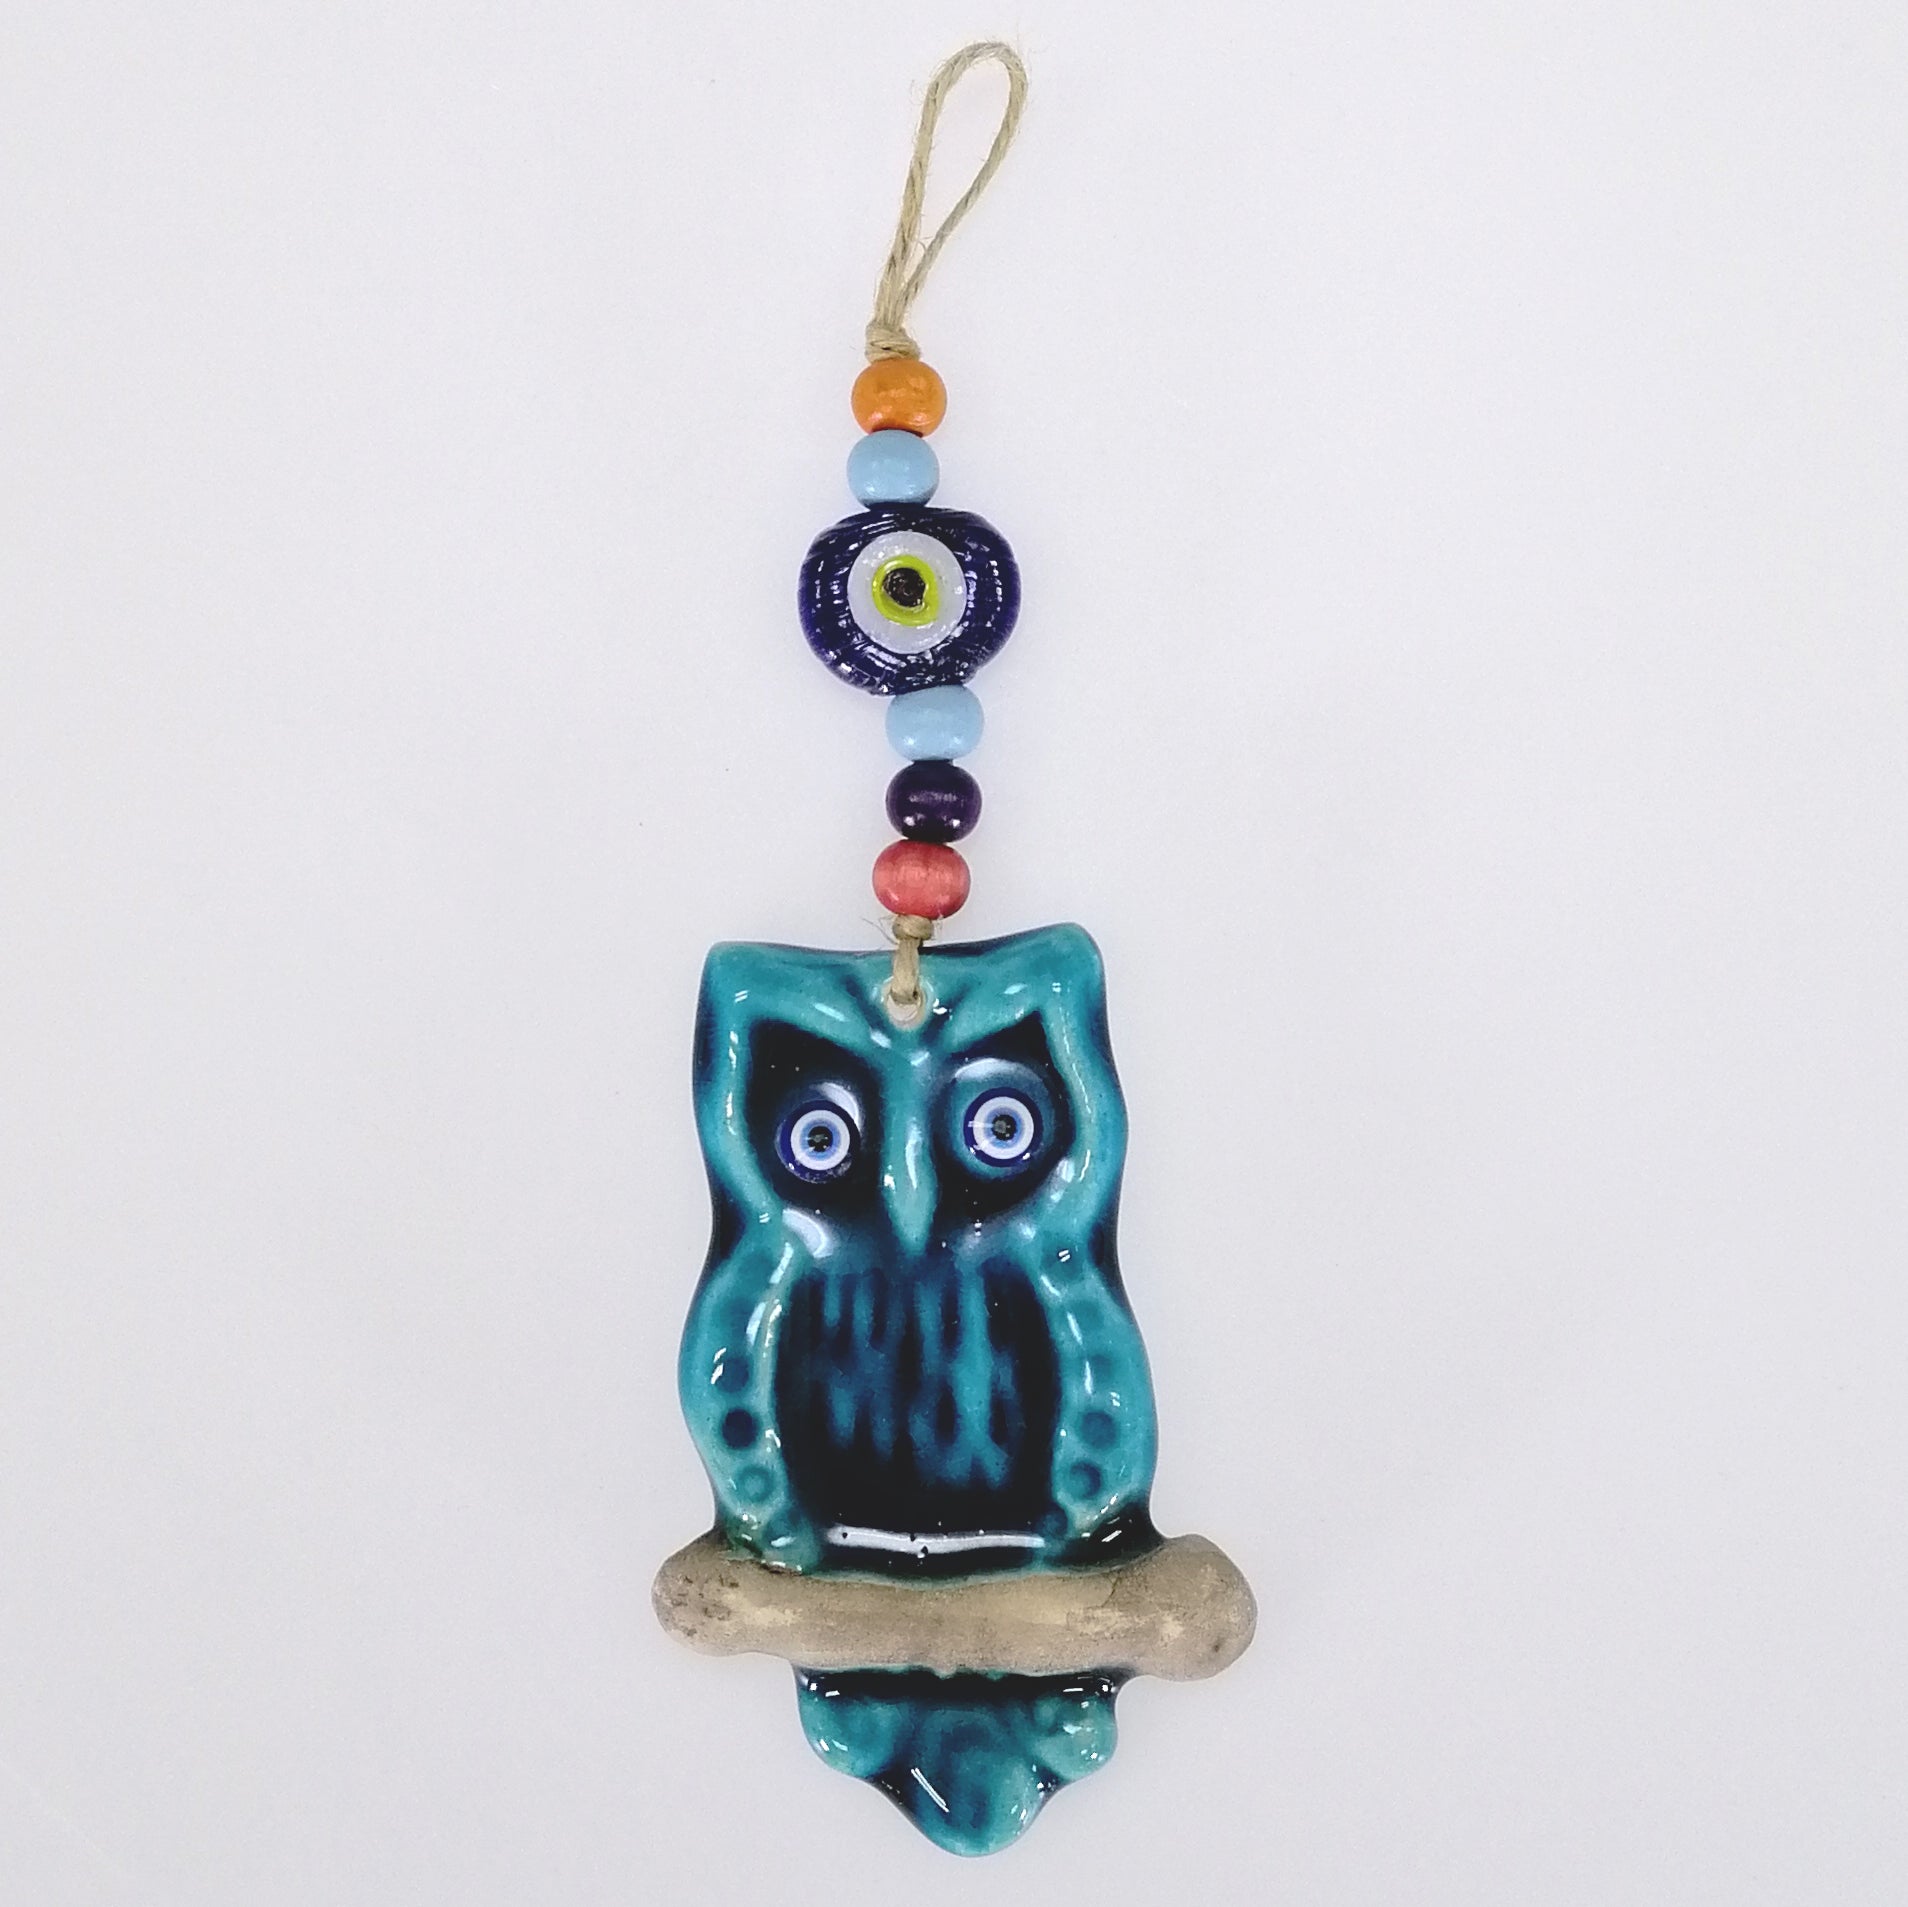 Turkish Ceramic Hanging Ornament - Owl on Branch